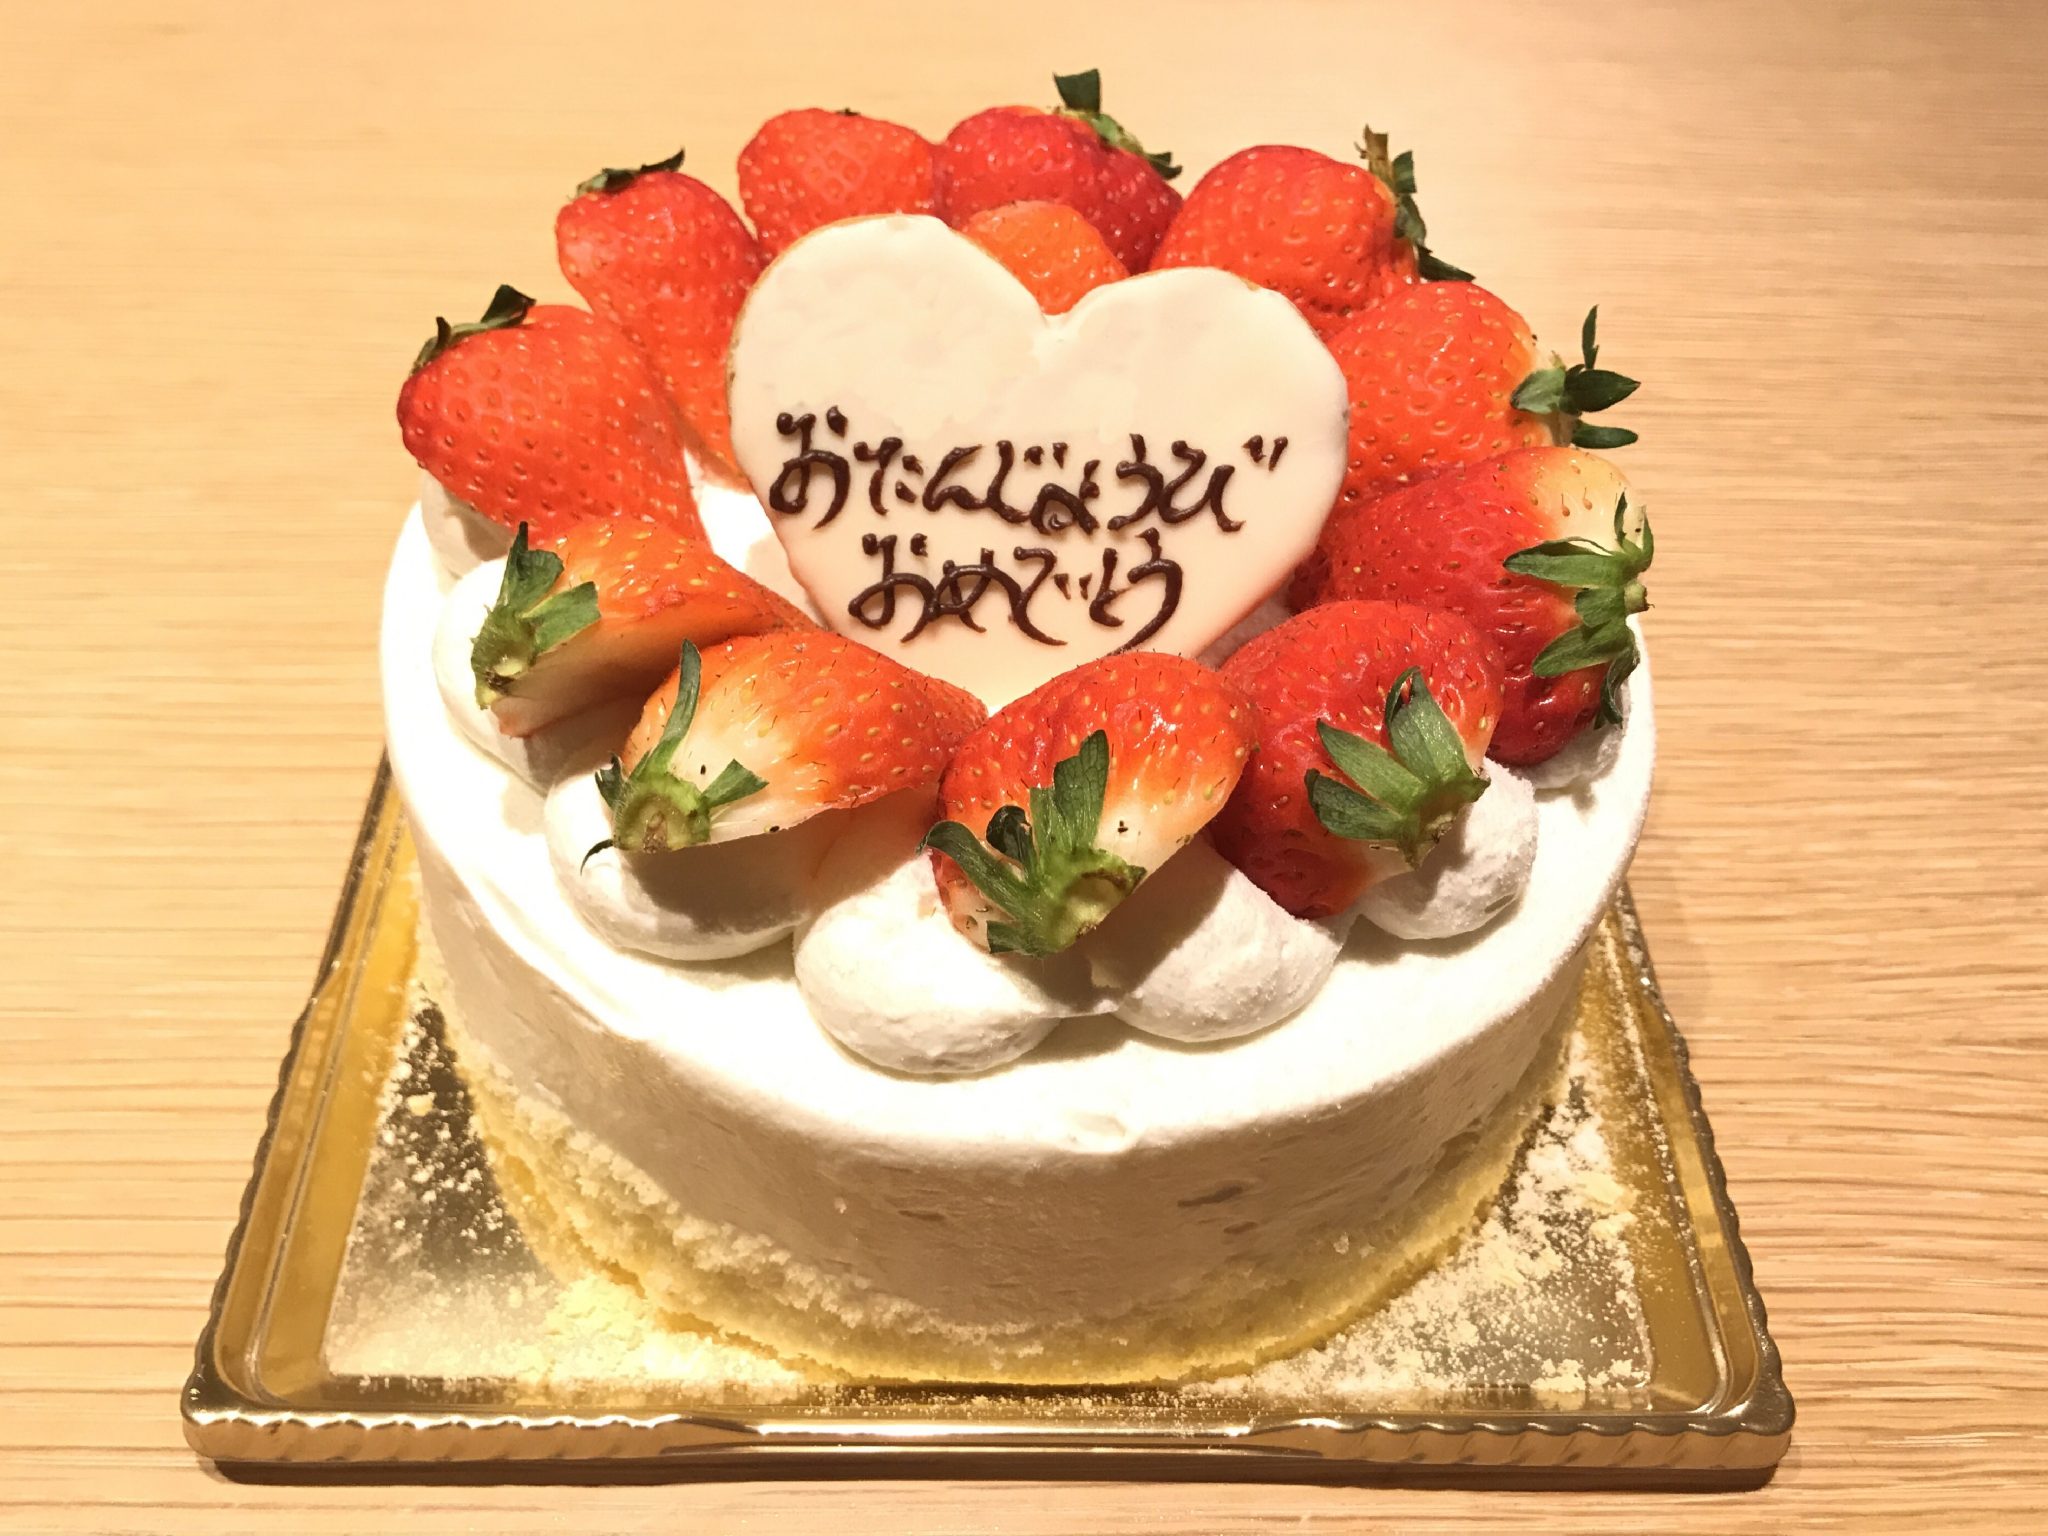 “Happy Birthday” in Japanese How to Celebrate Birthdays in Japan